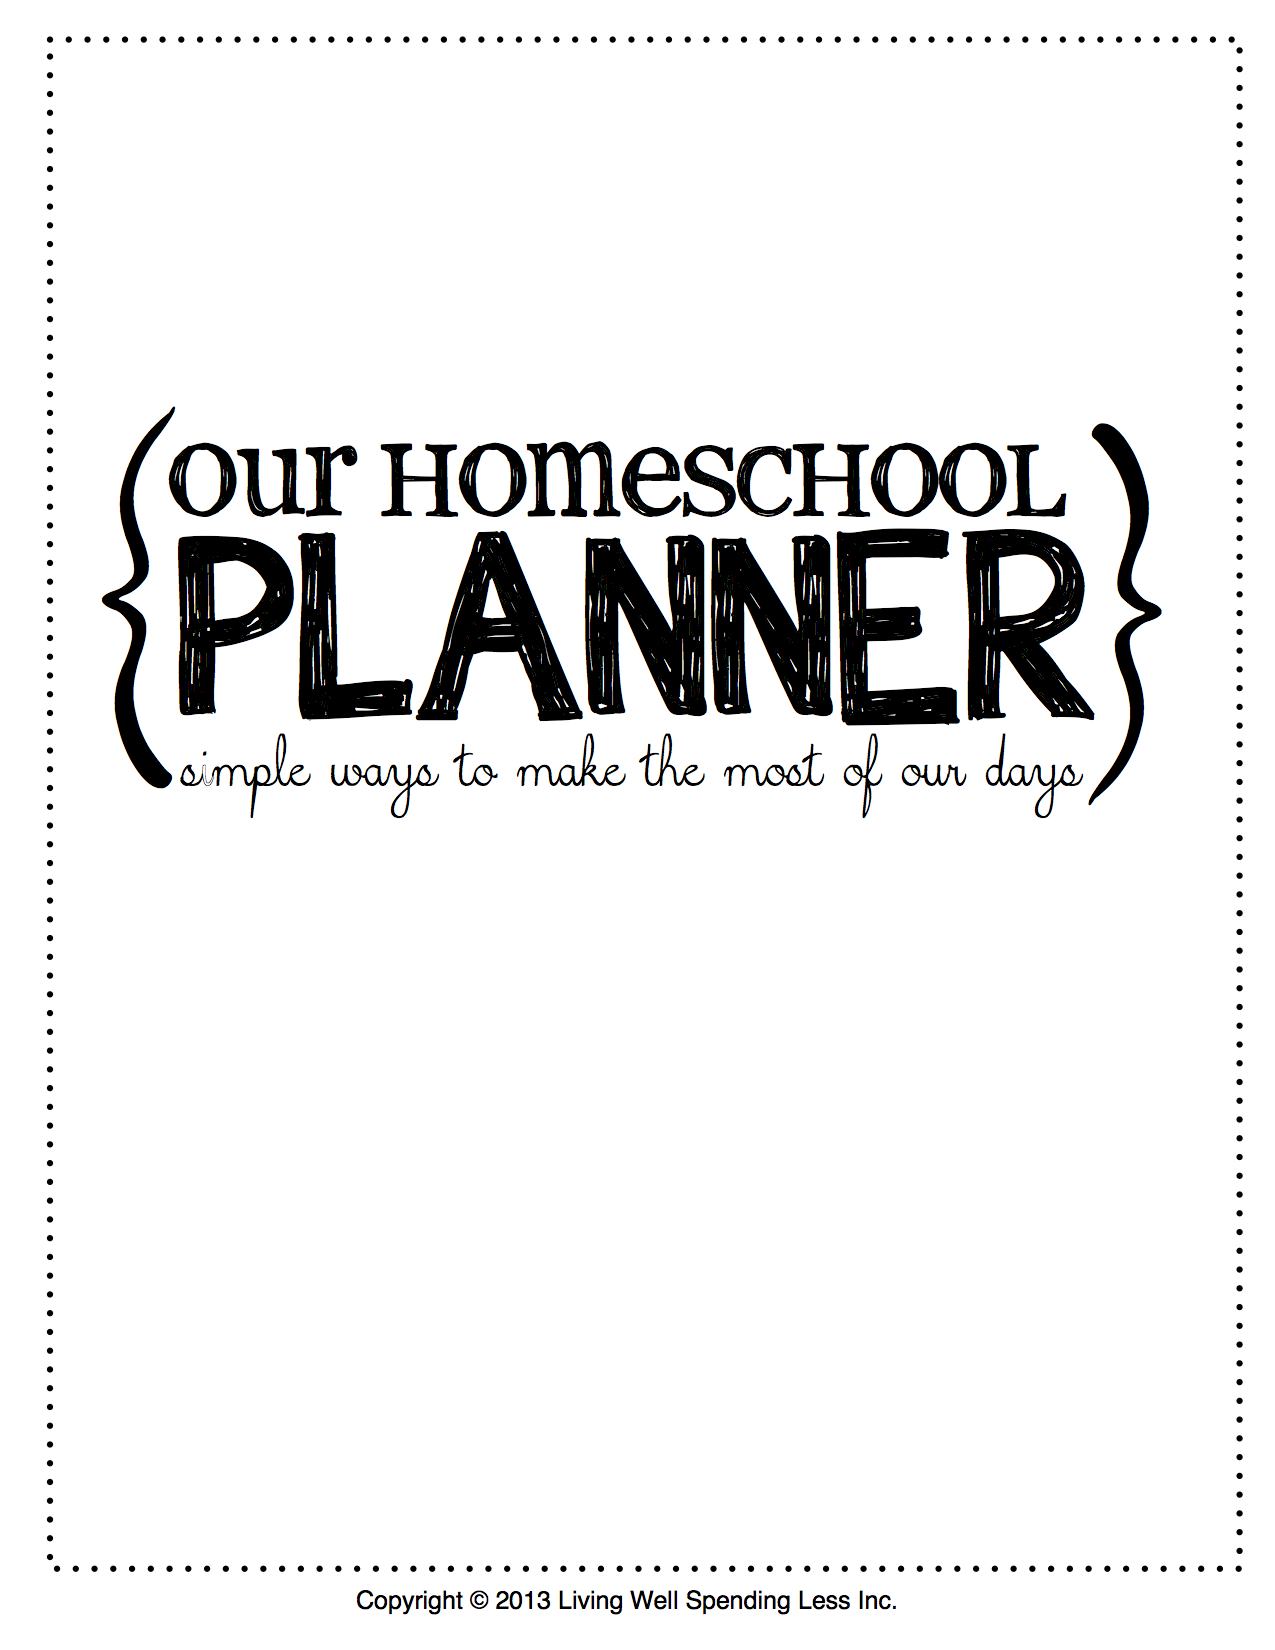 homeschool-planner-free-printables-free-planner-download